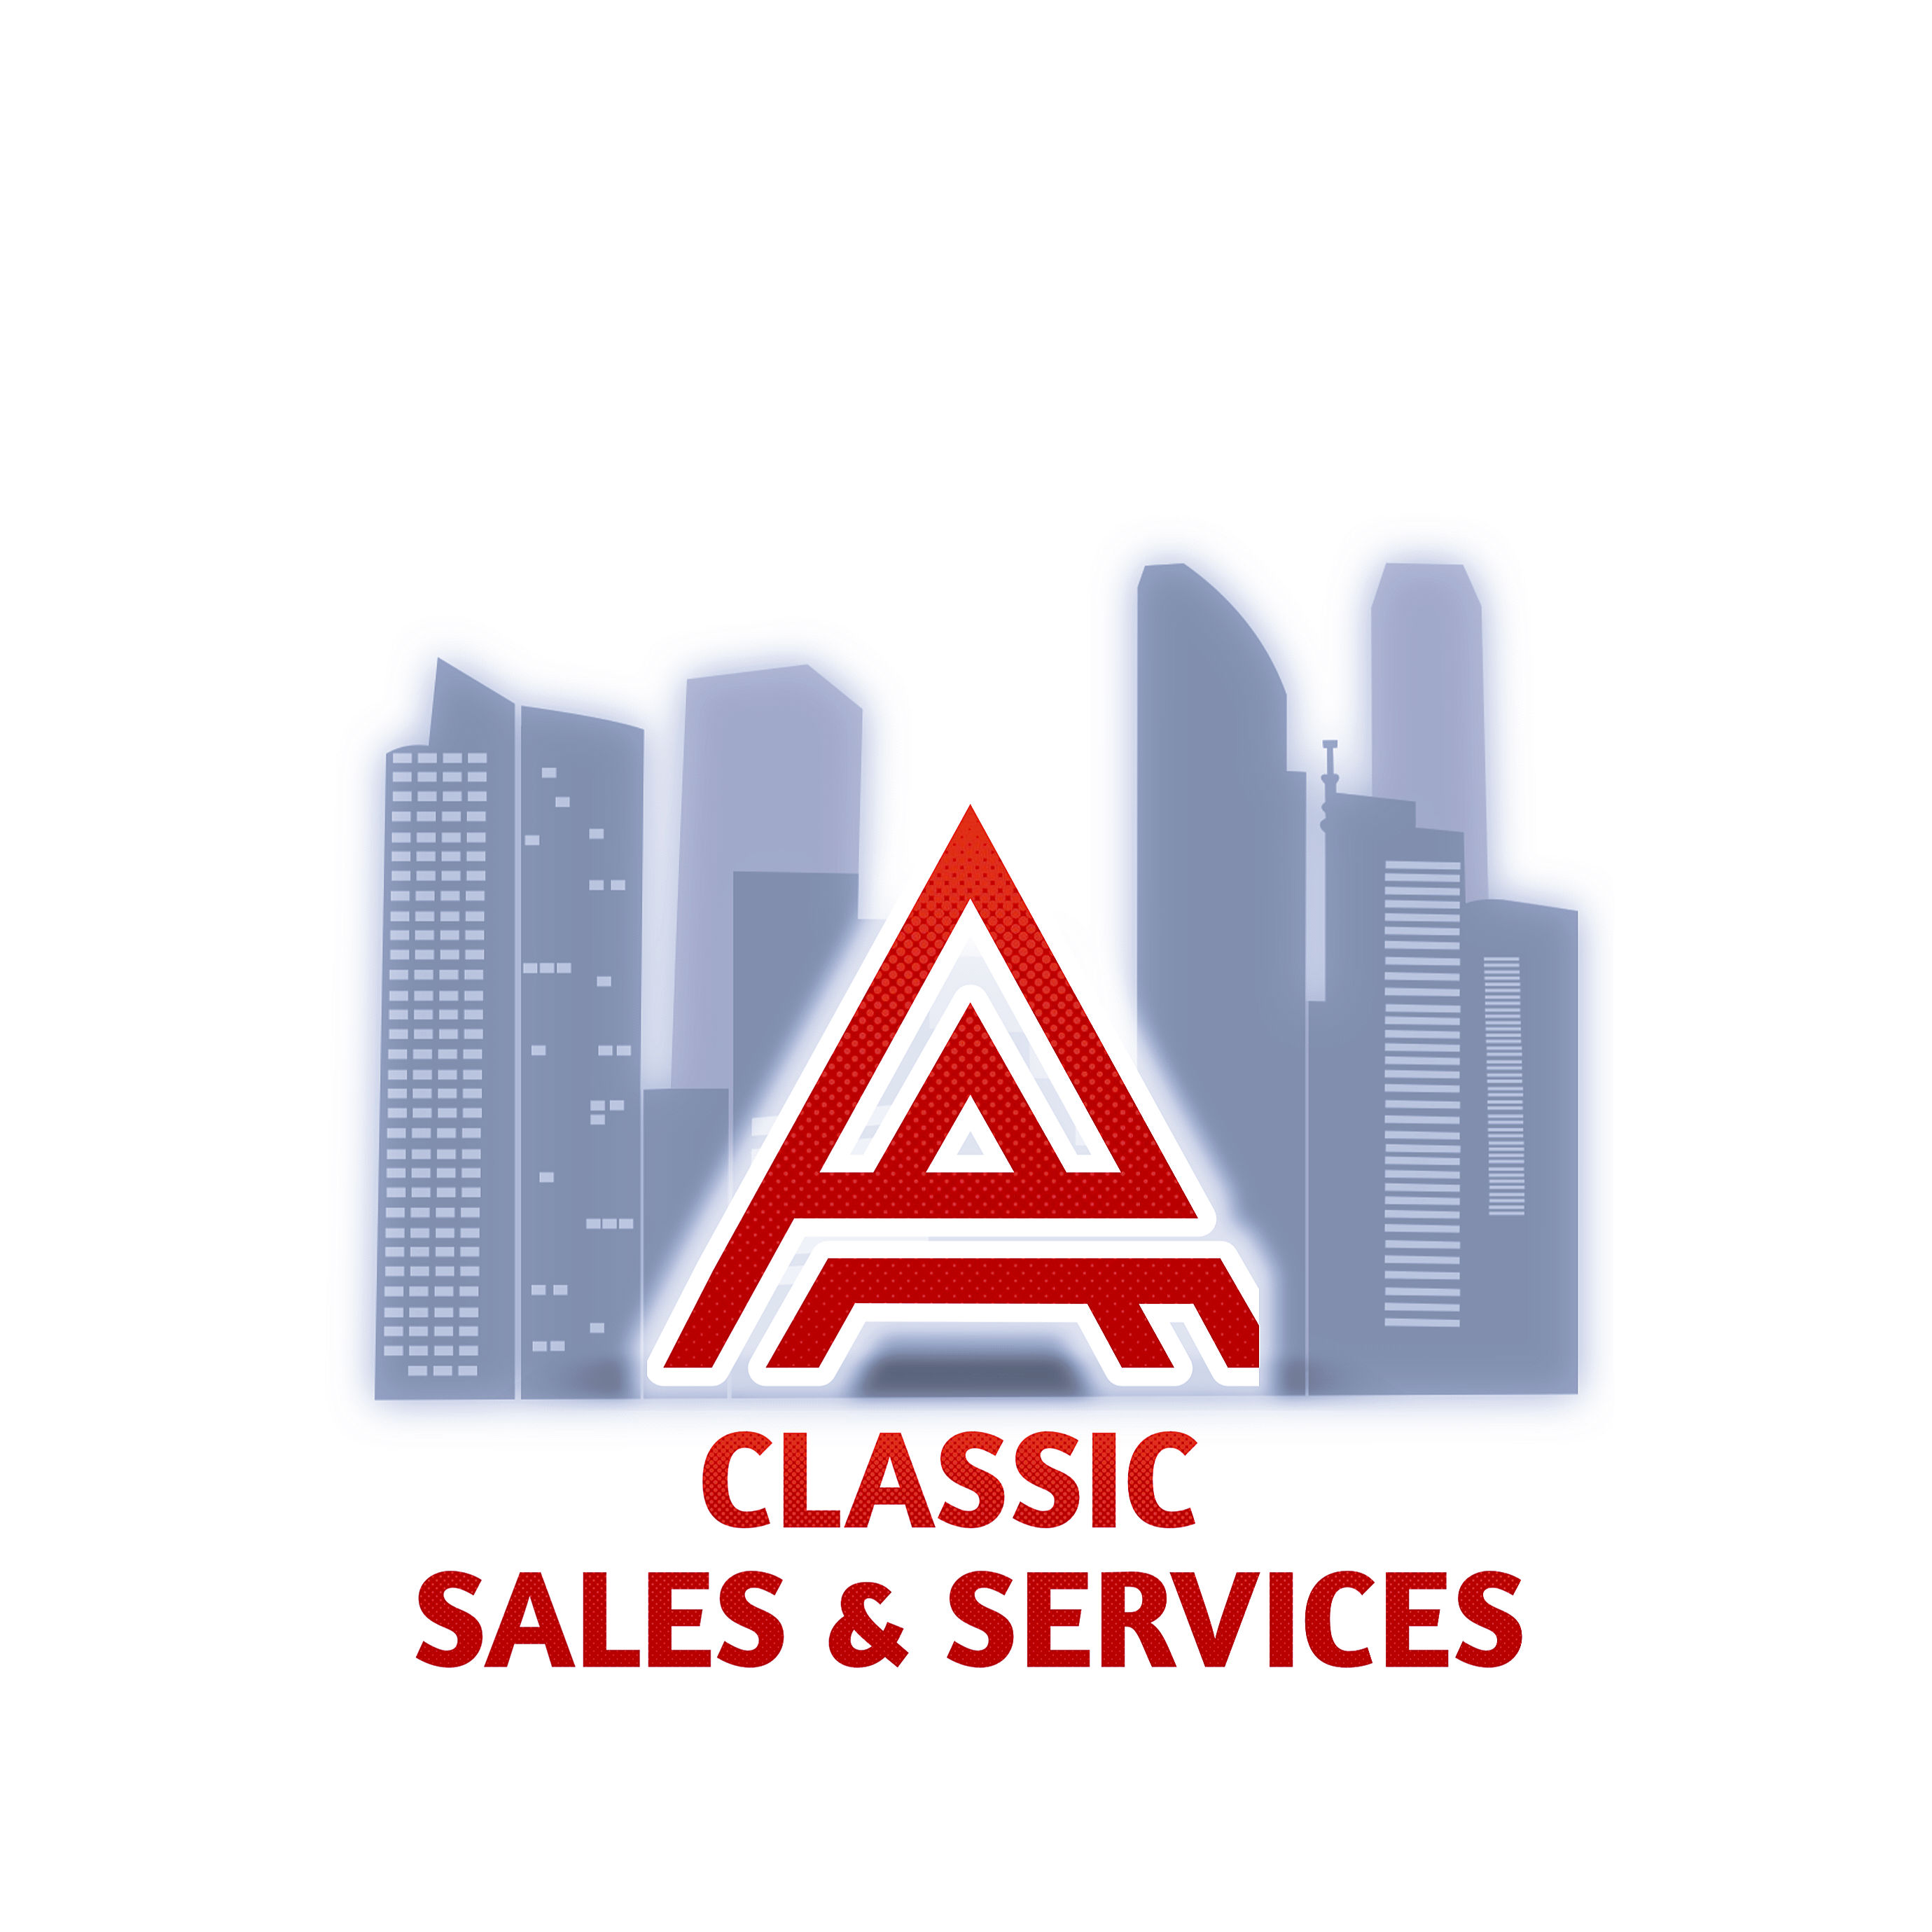 A Classic Sales & Services